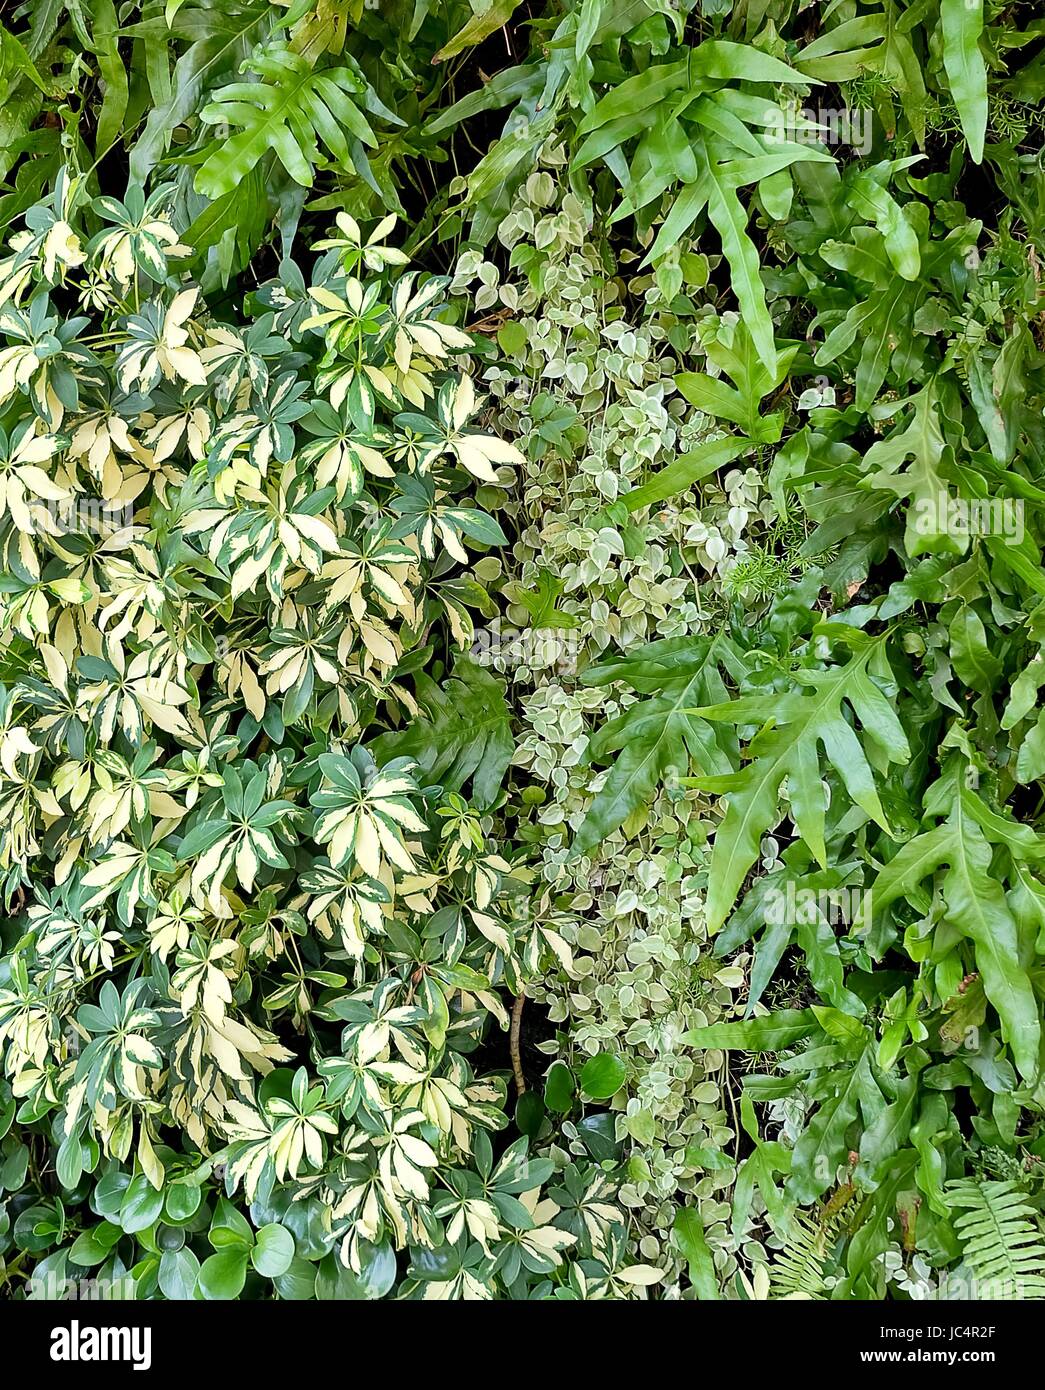 Background Pattern, Beautiful Green Leaves Wall of Polypodium Diversifolium, Schefflera actinophylla, Ferns and Creeper Plants. Stock Photo